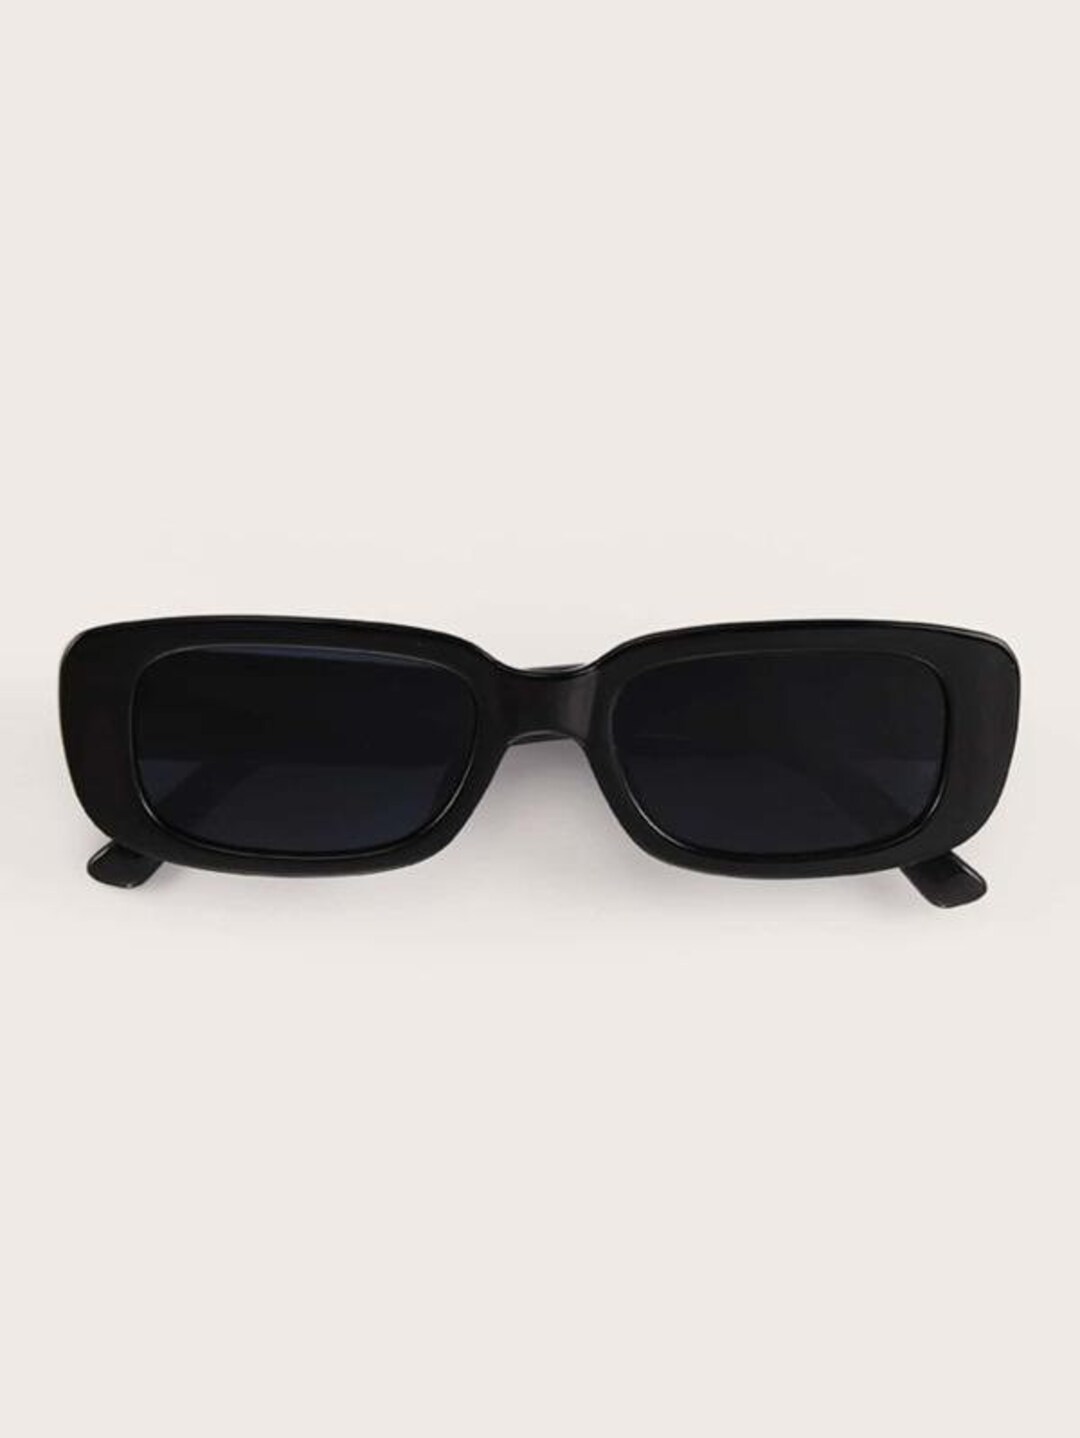 Black Rectangle Women's Sunglasses